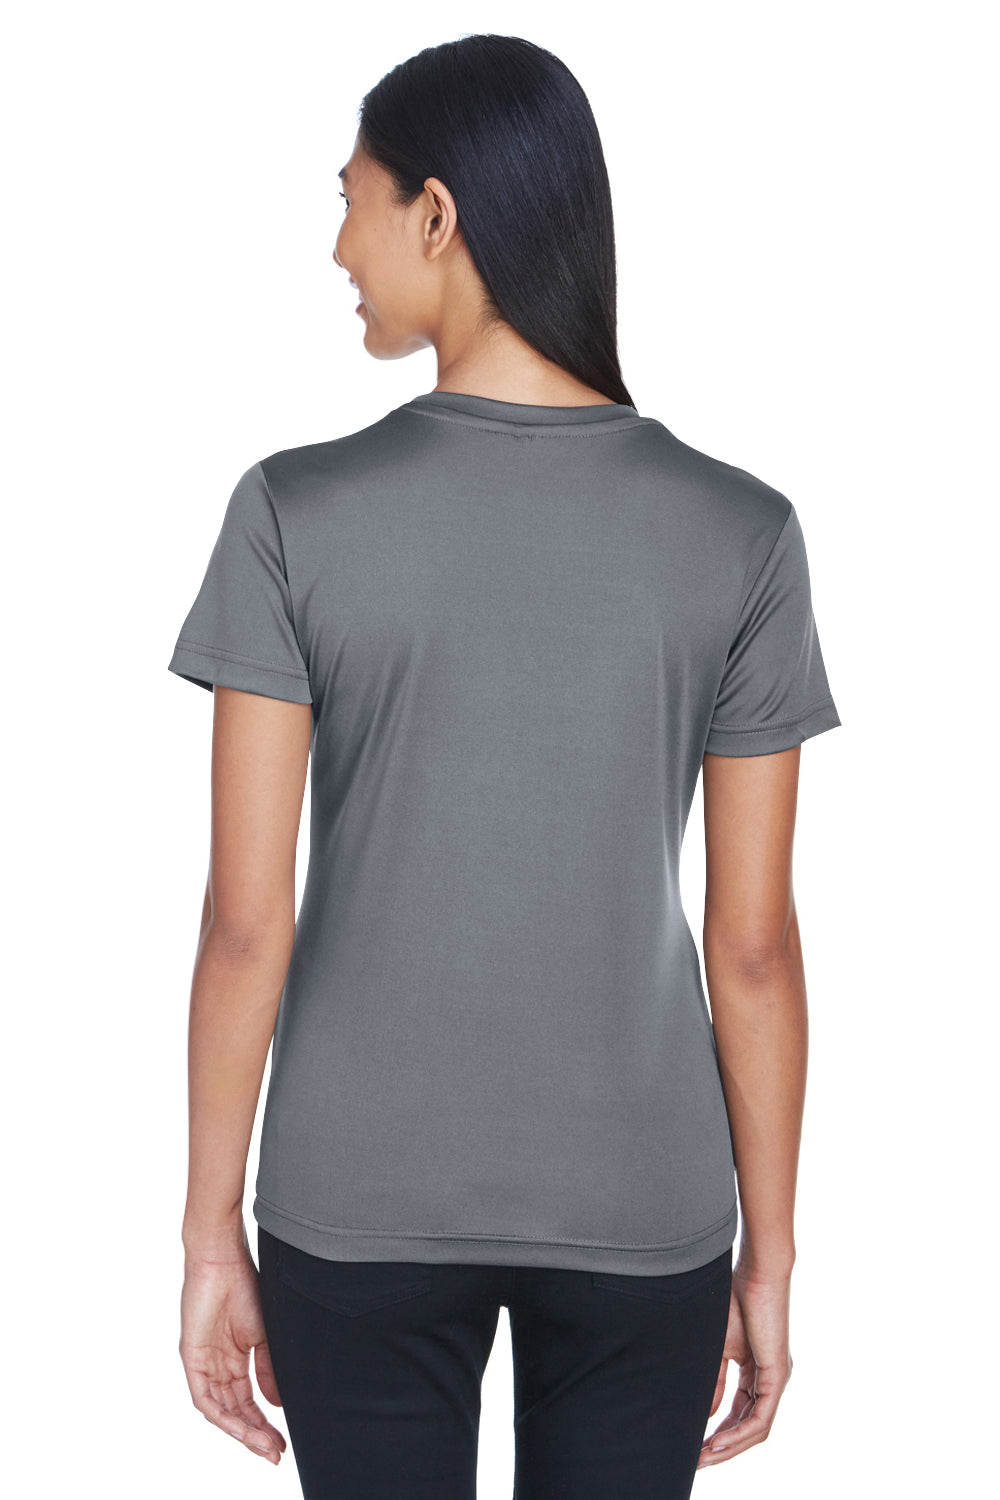 UltraClub 8620L Womens Cool & Dry Performance Moisture Wicking Short Sleeve Crewneck T-Shirt Charcoal Grey Back